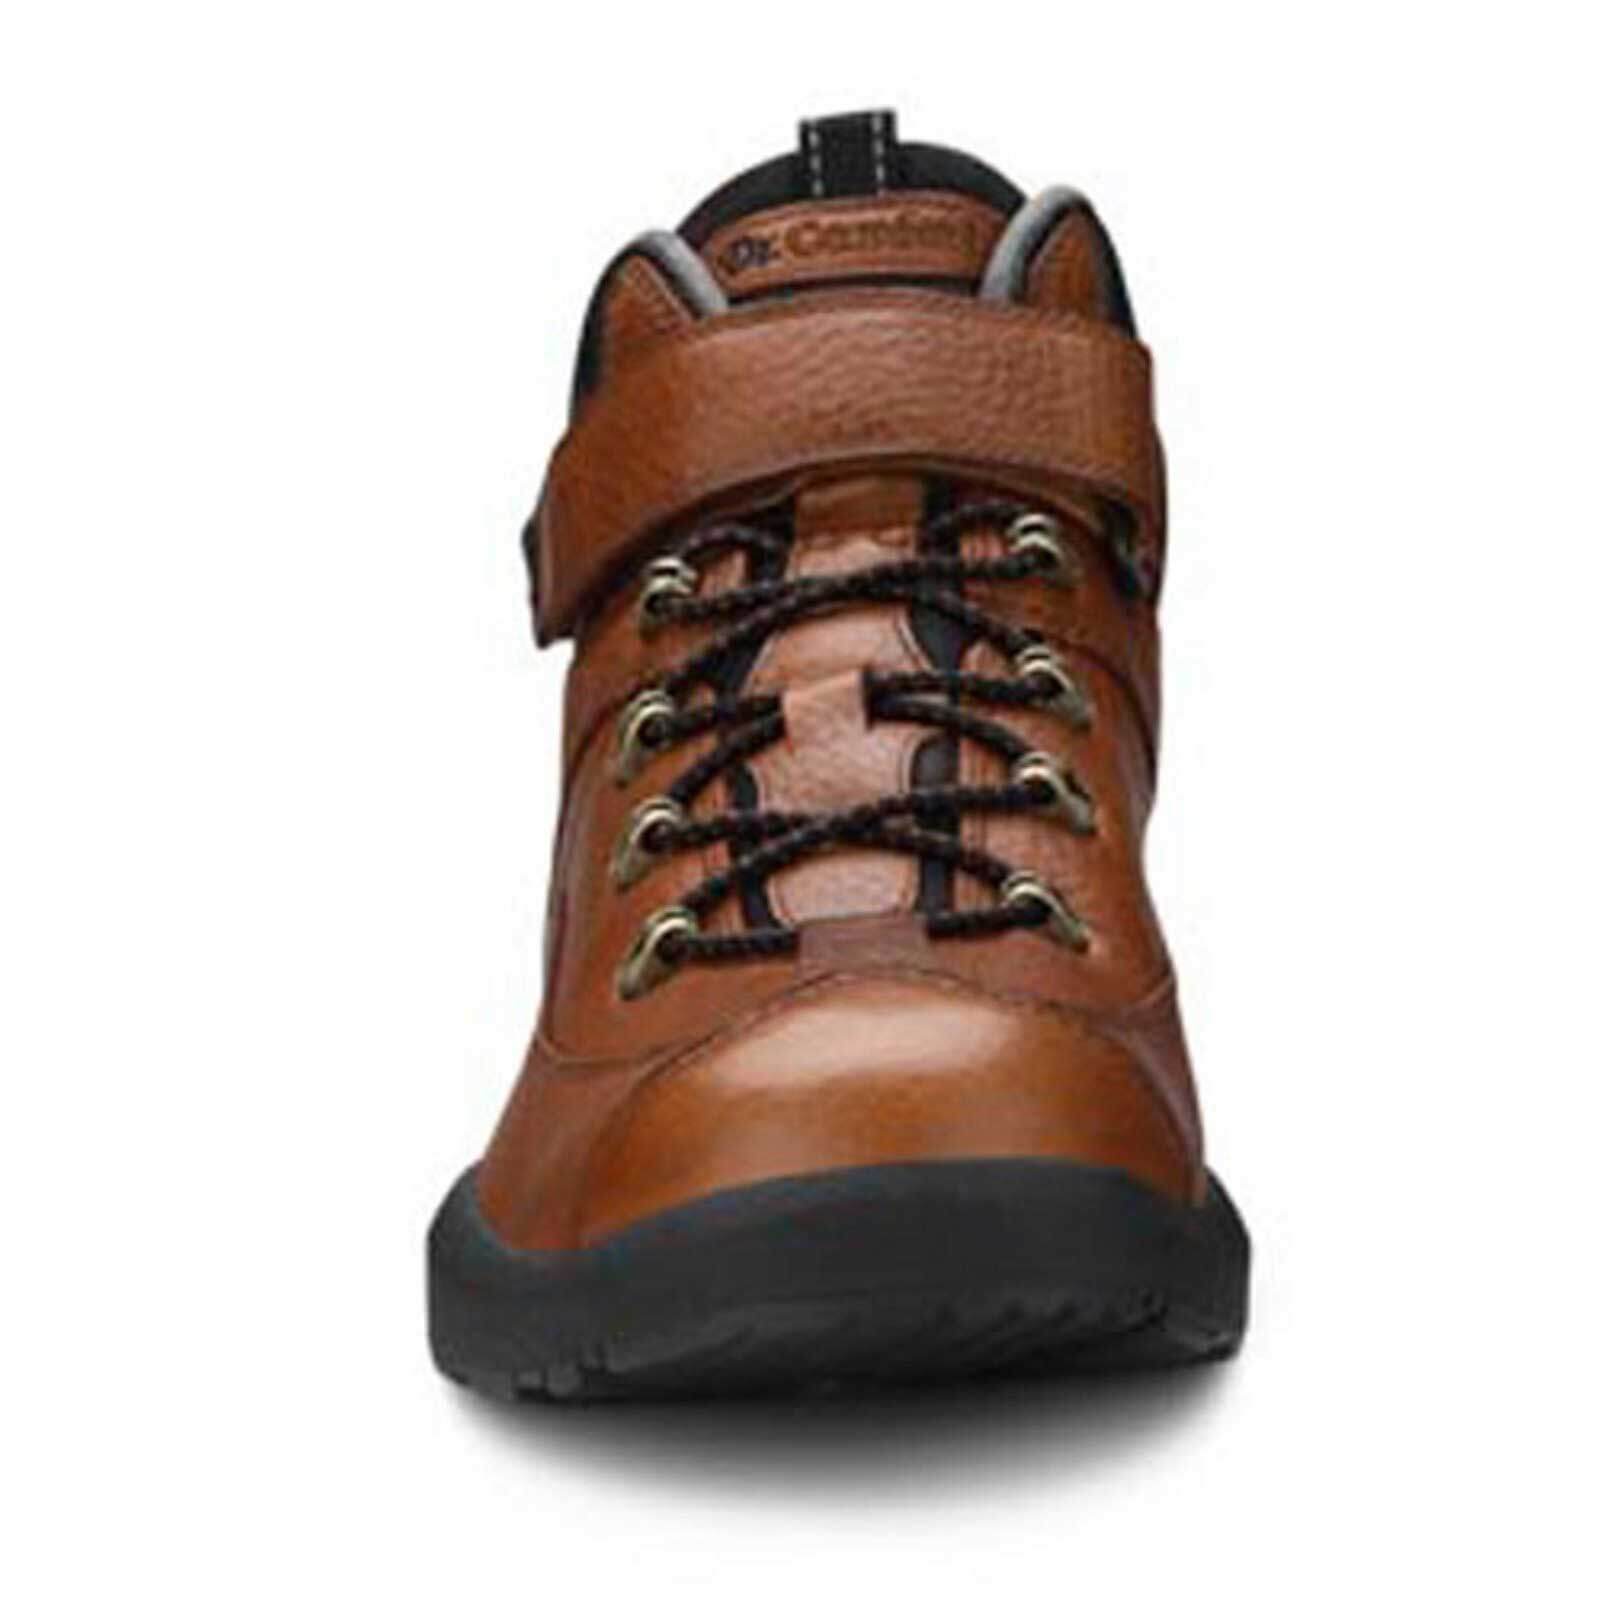 Dr. Comfort Men's Ranger Diabetic Shoes - Chestnut - American Q